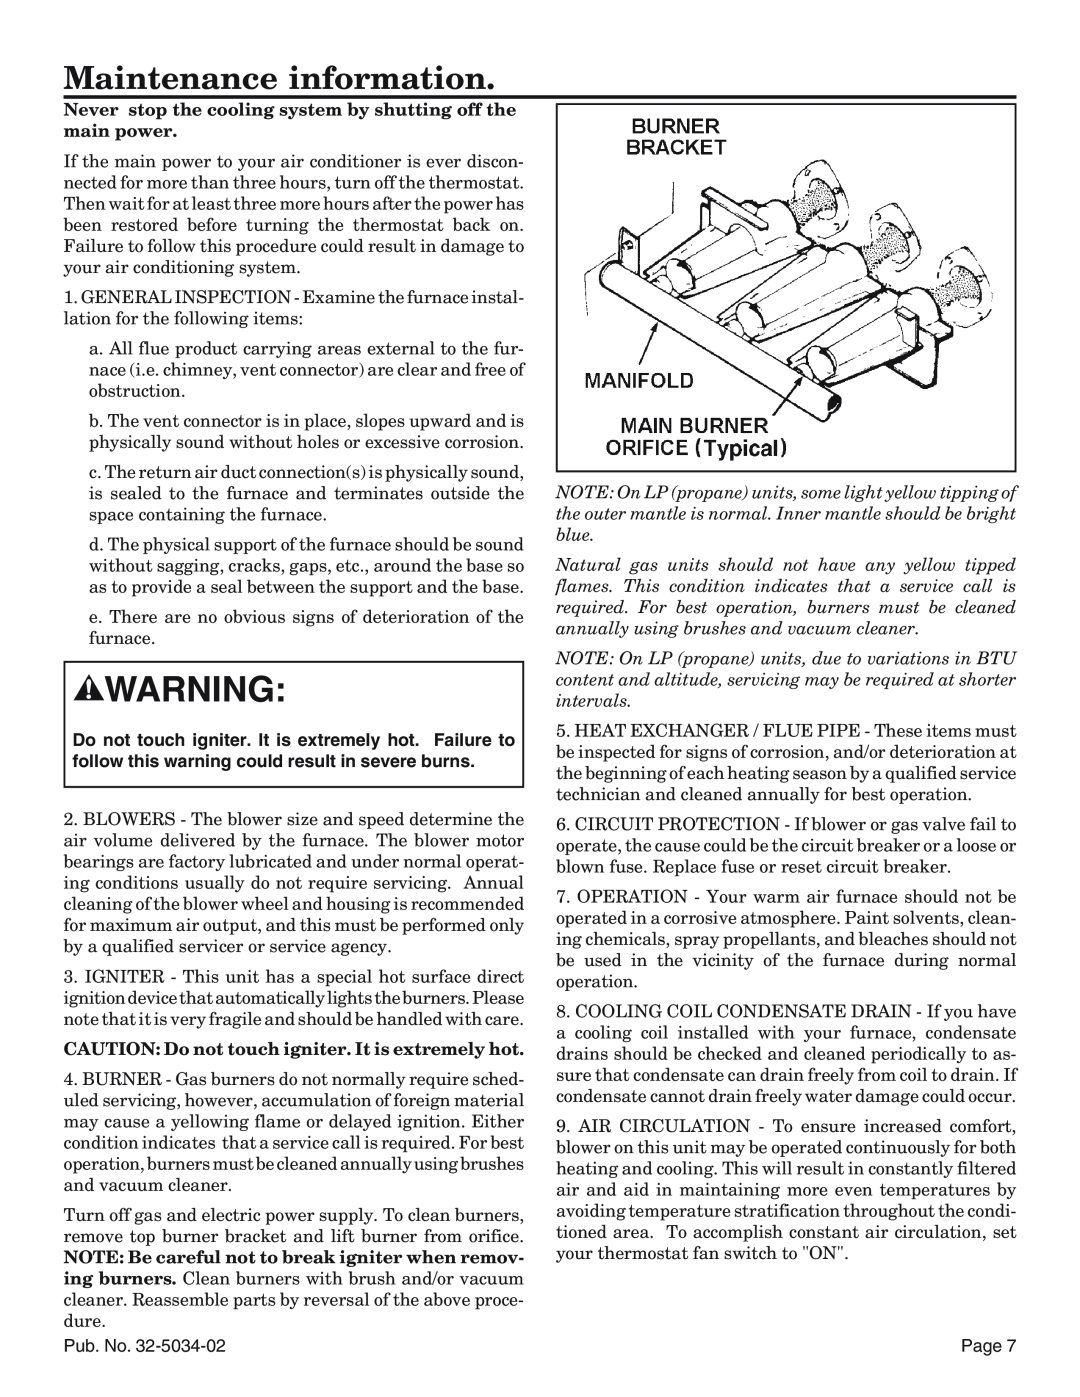 American Standard Noncondensing Gas Furnaces manual Maintenance information 